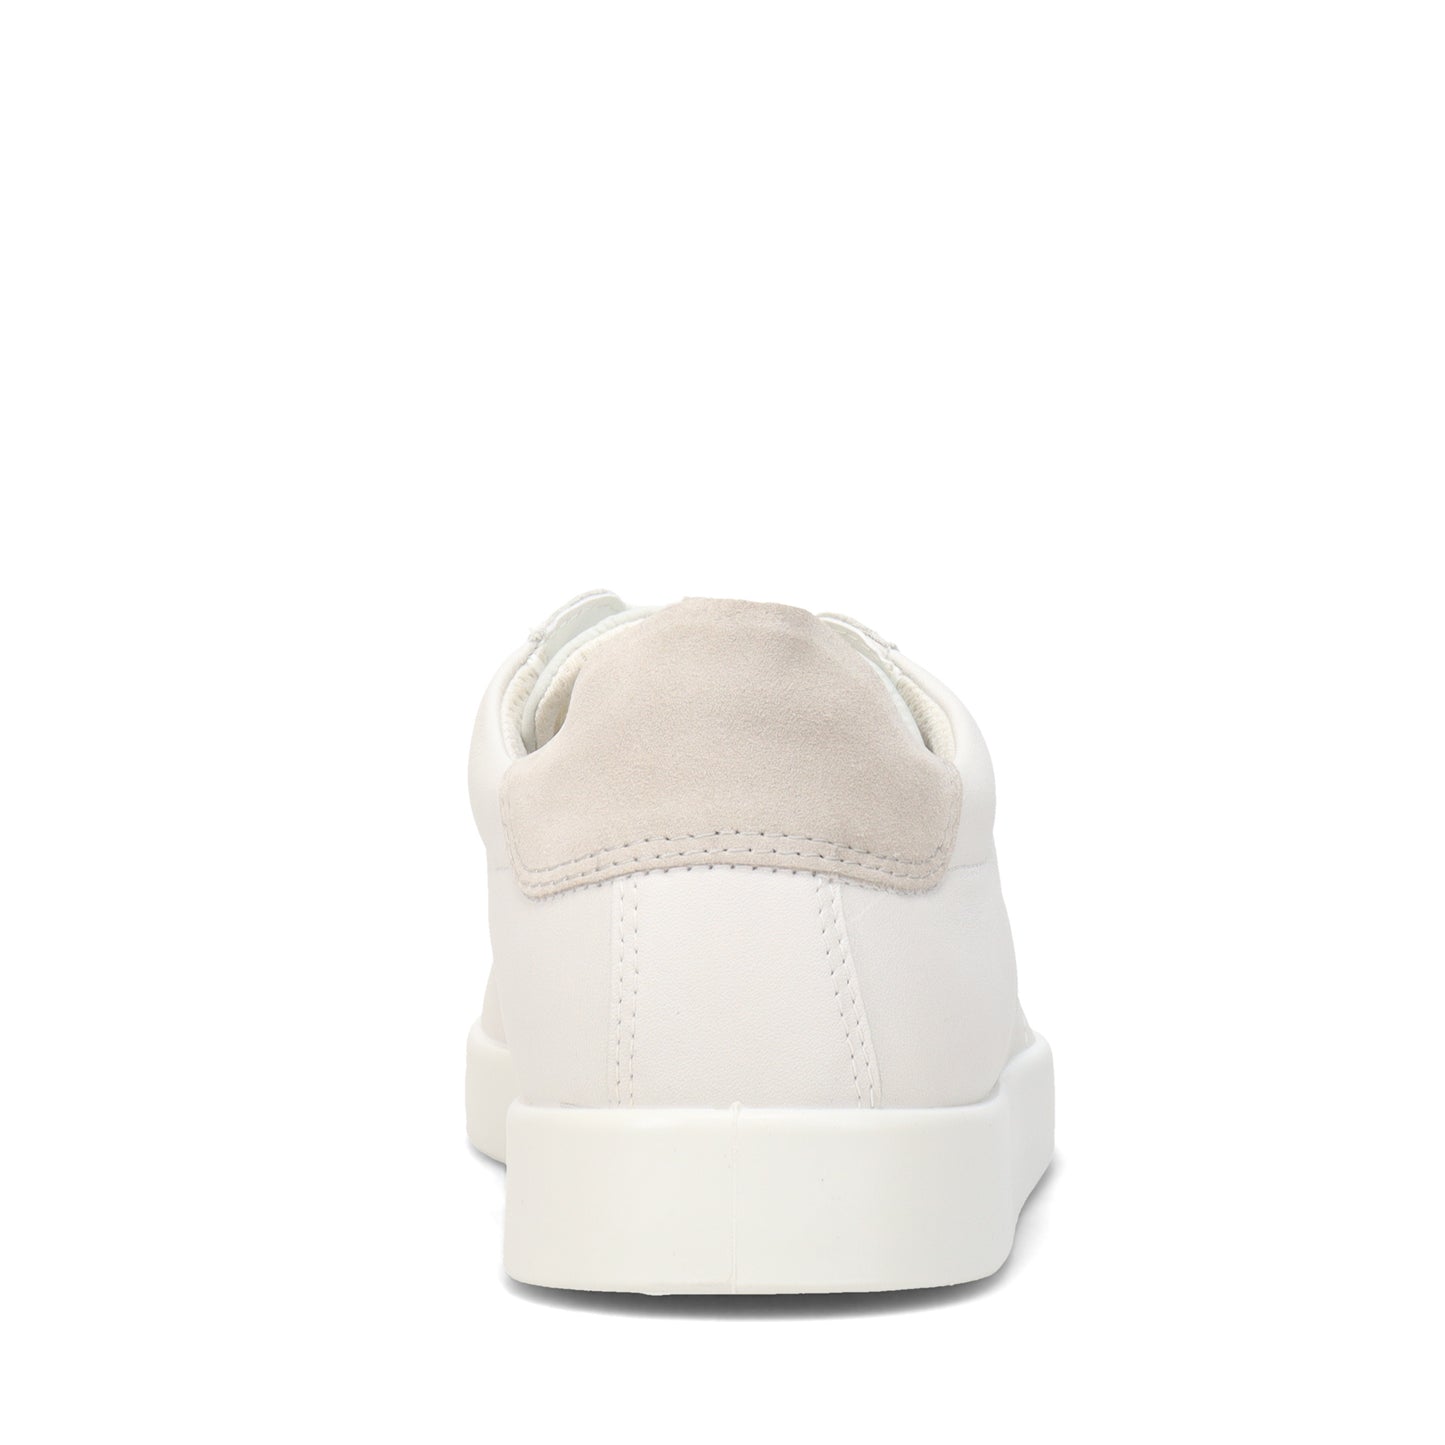 Peltz Shoes  Men's Ecco Street Lite Retro Sneaker WHITE GREY 521304-58336